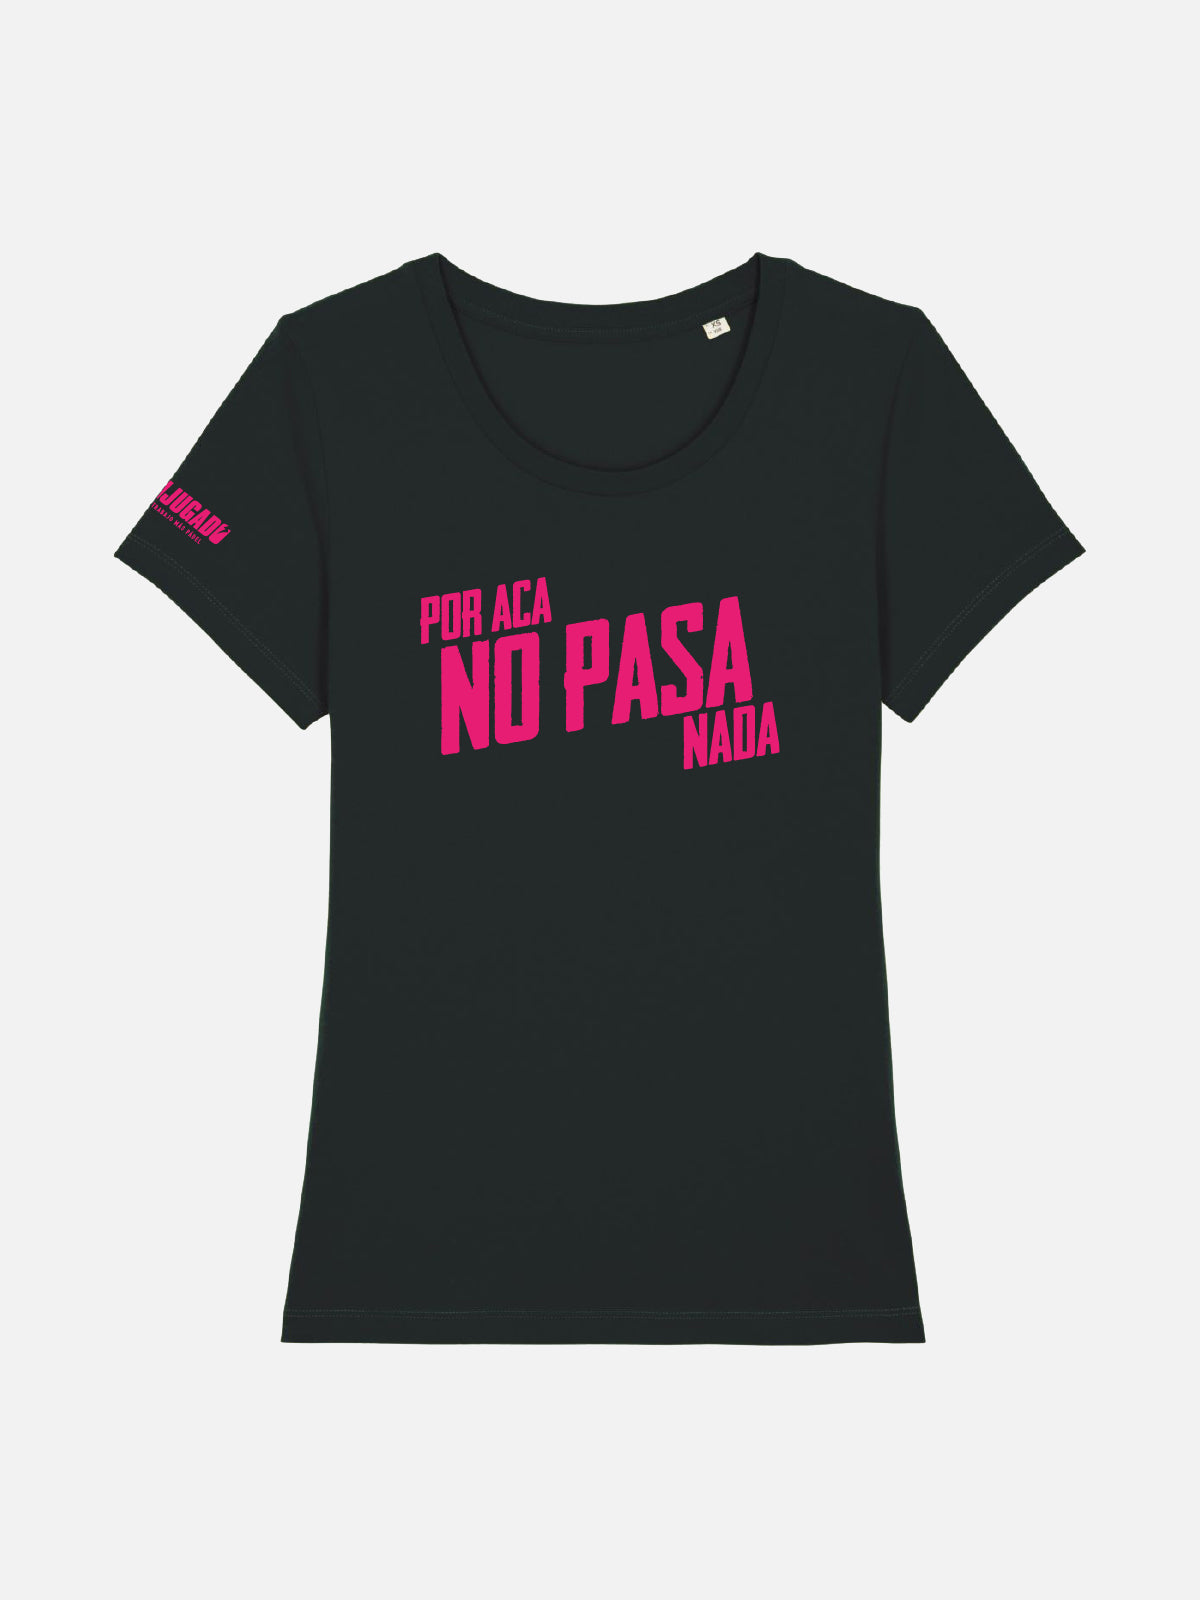 Women's Fun T-Shirt - Por Aca No Pasa Nada